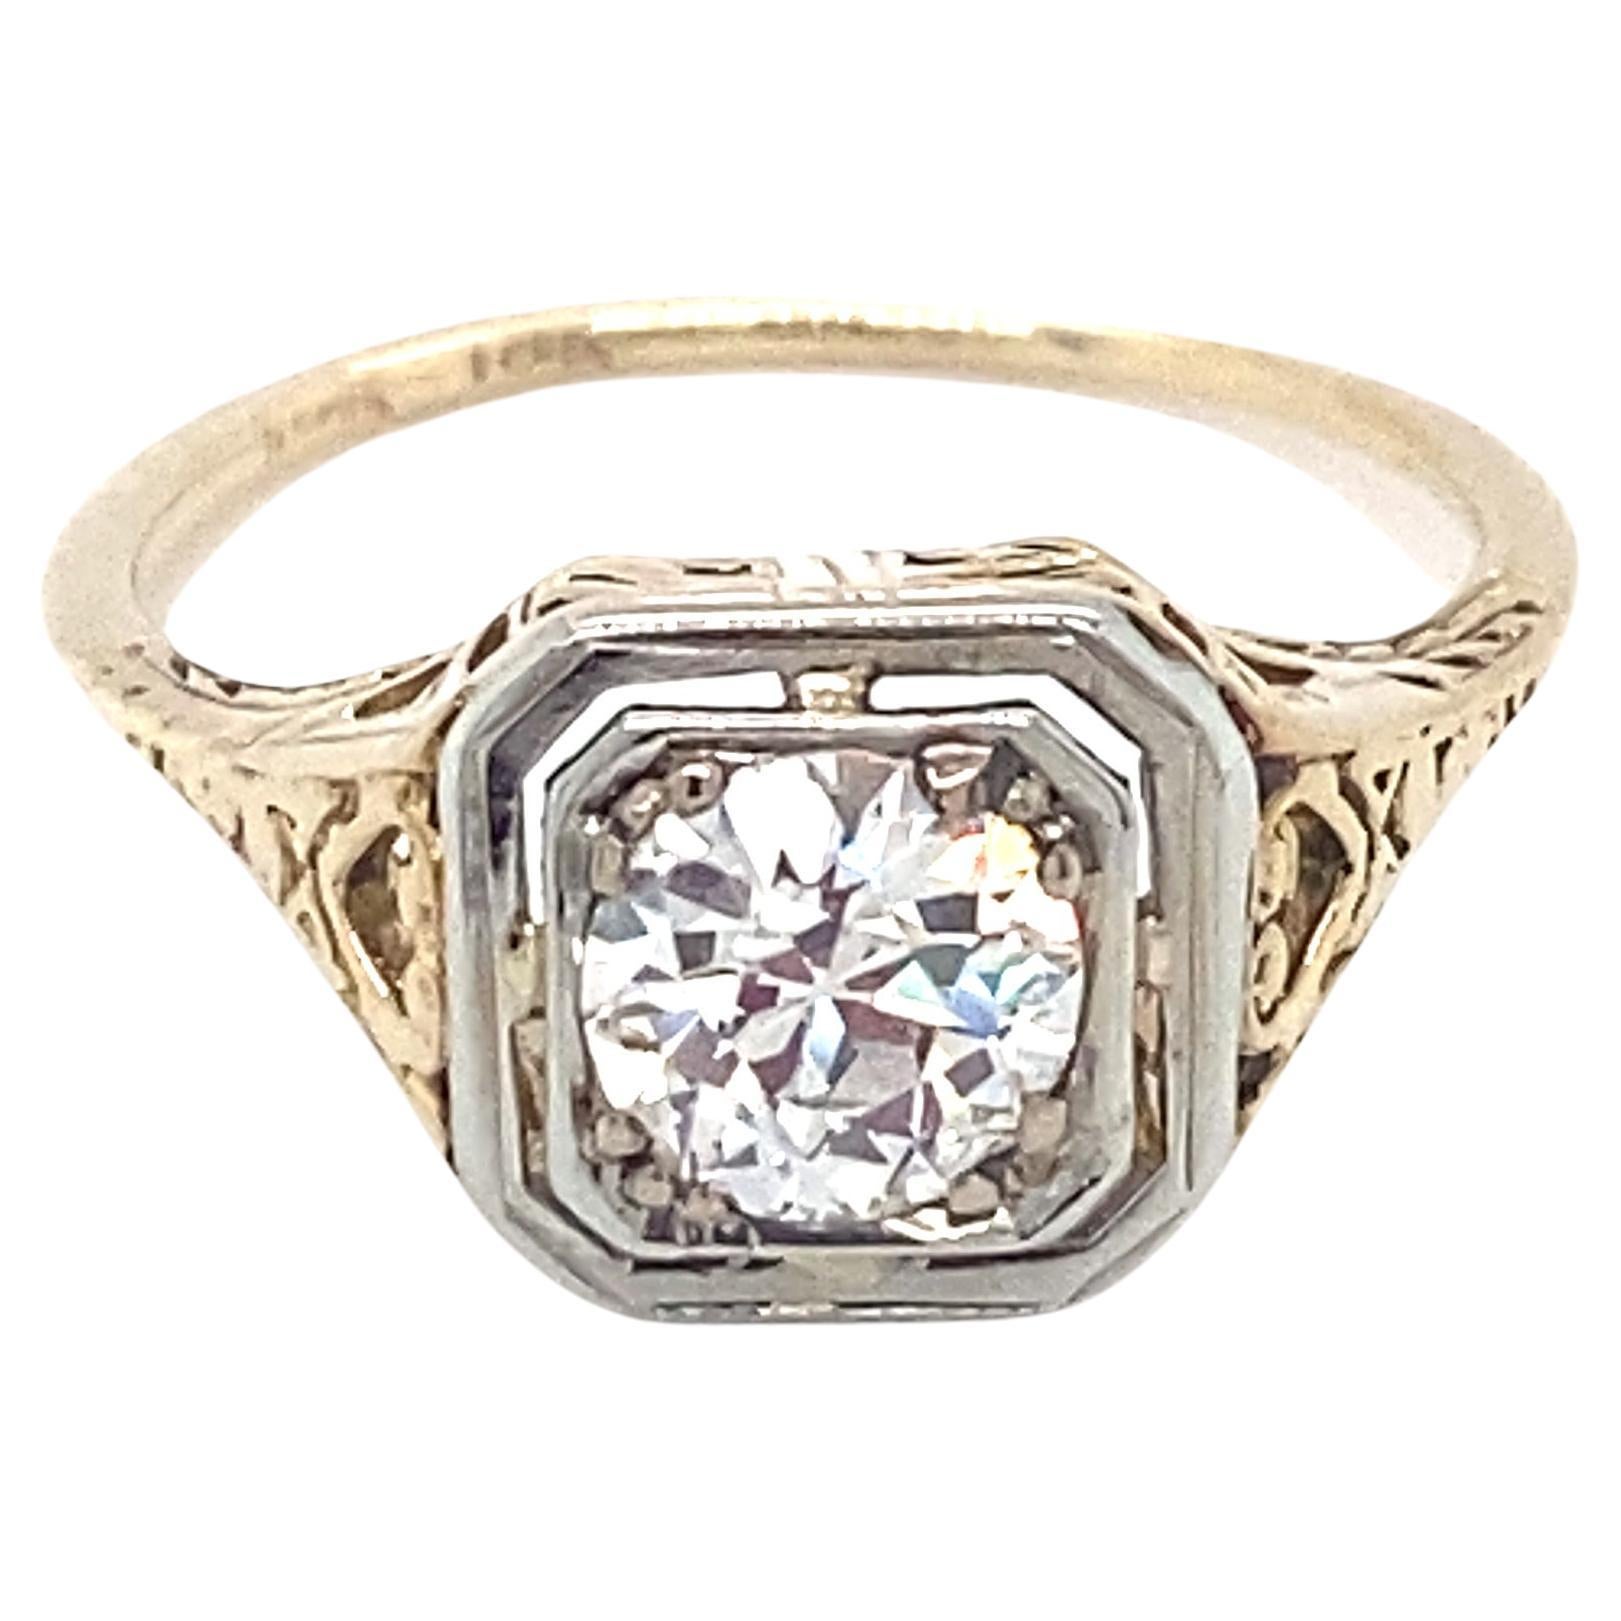 Circa 1920s Art Deco 0.95 Carat Diamond Ring in Two Tone 14K/18K Gold For Sale